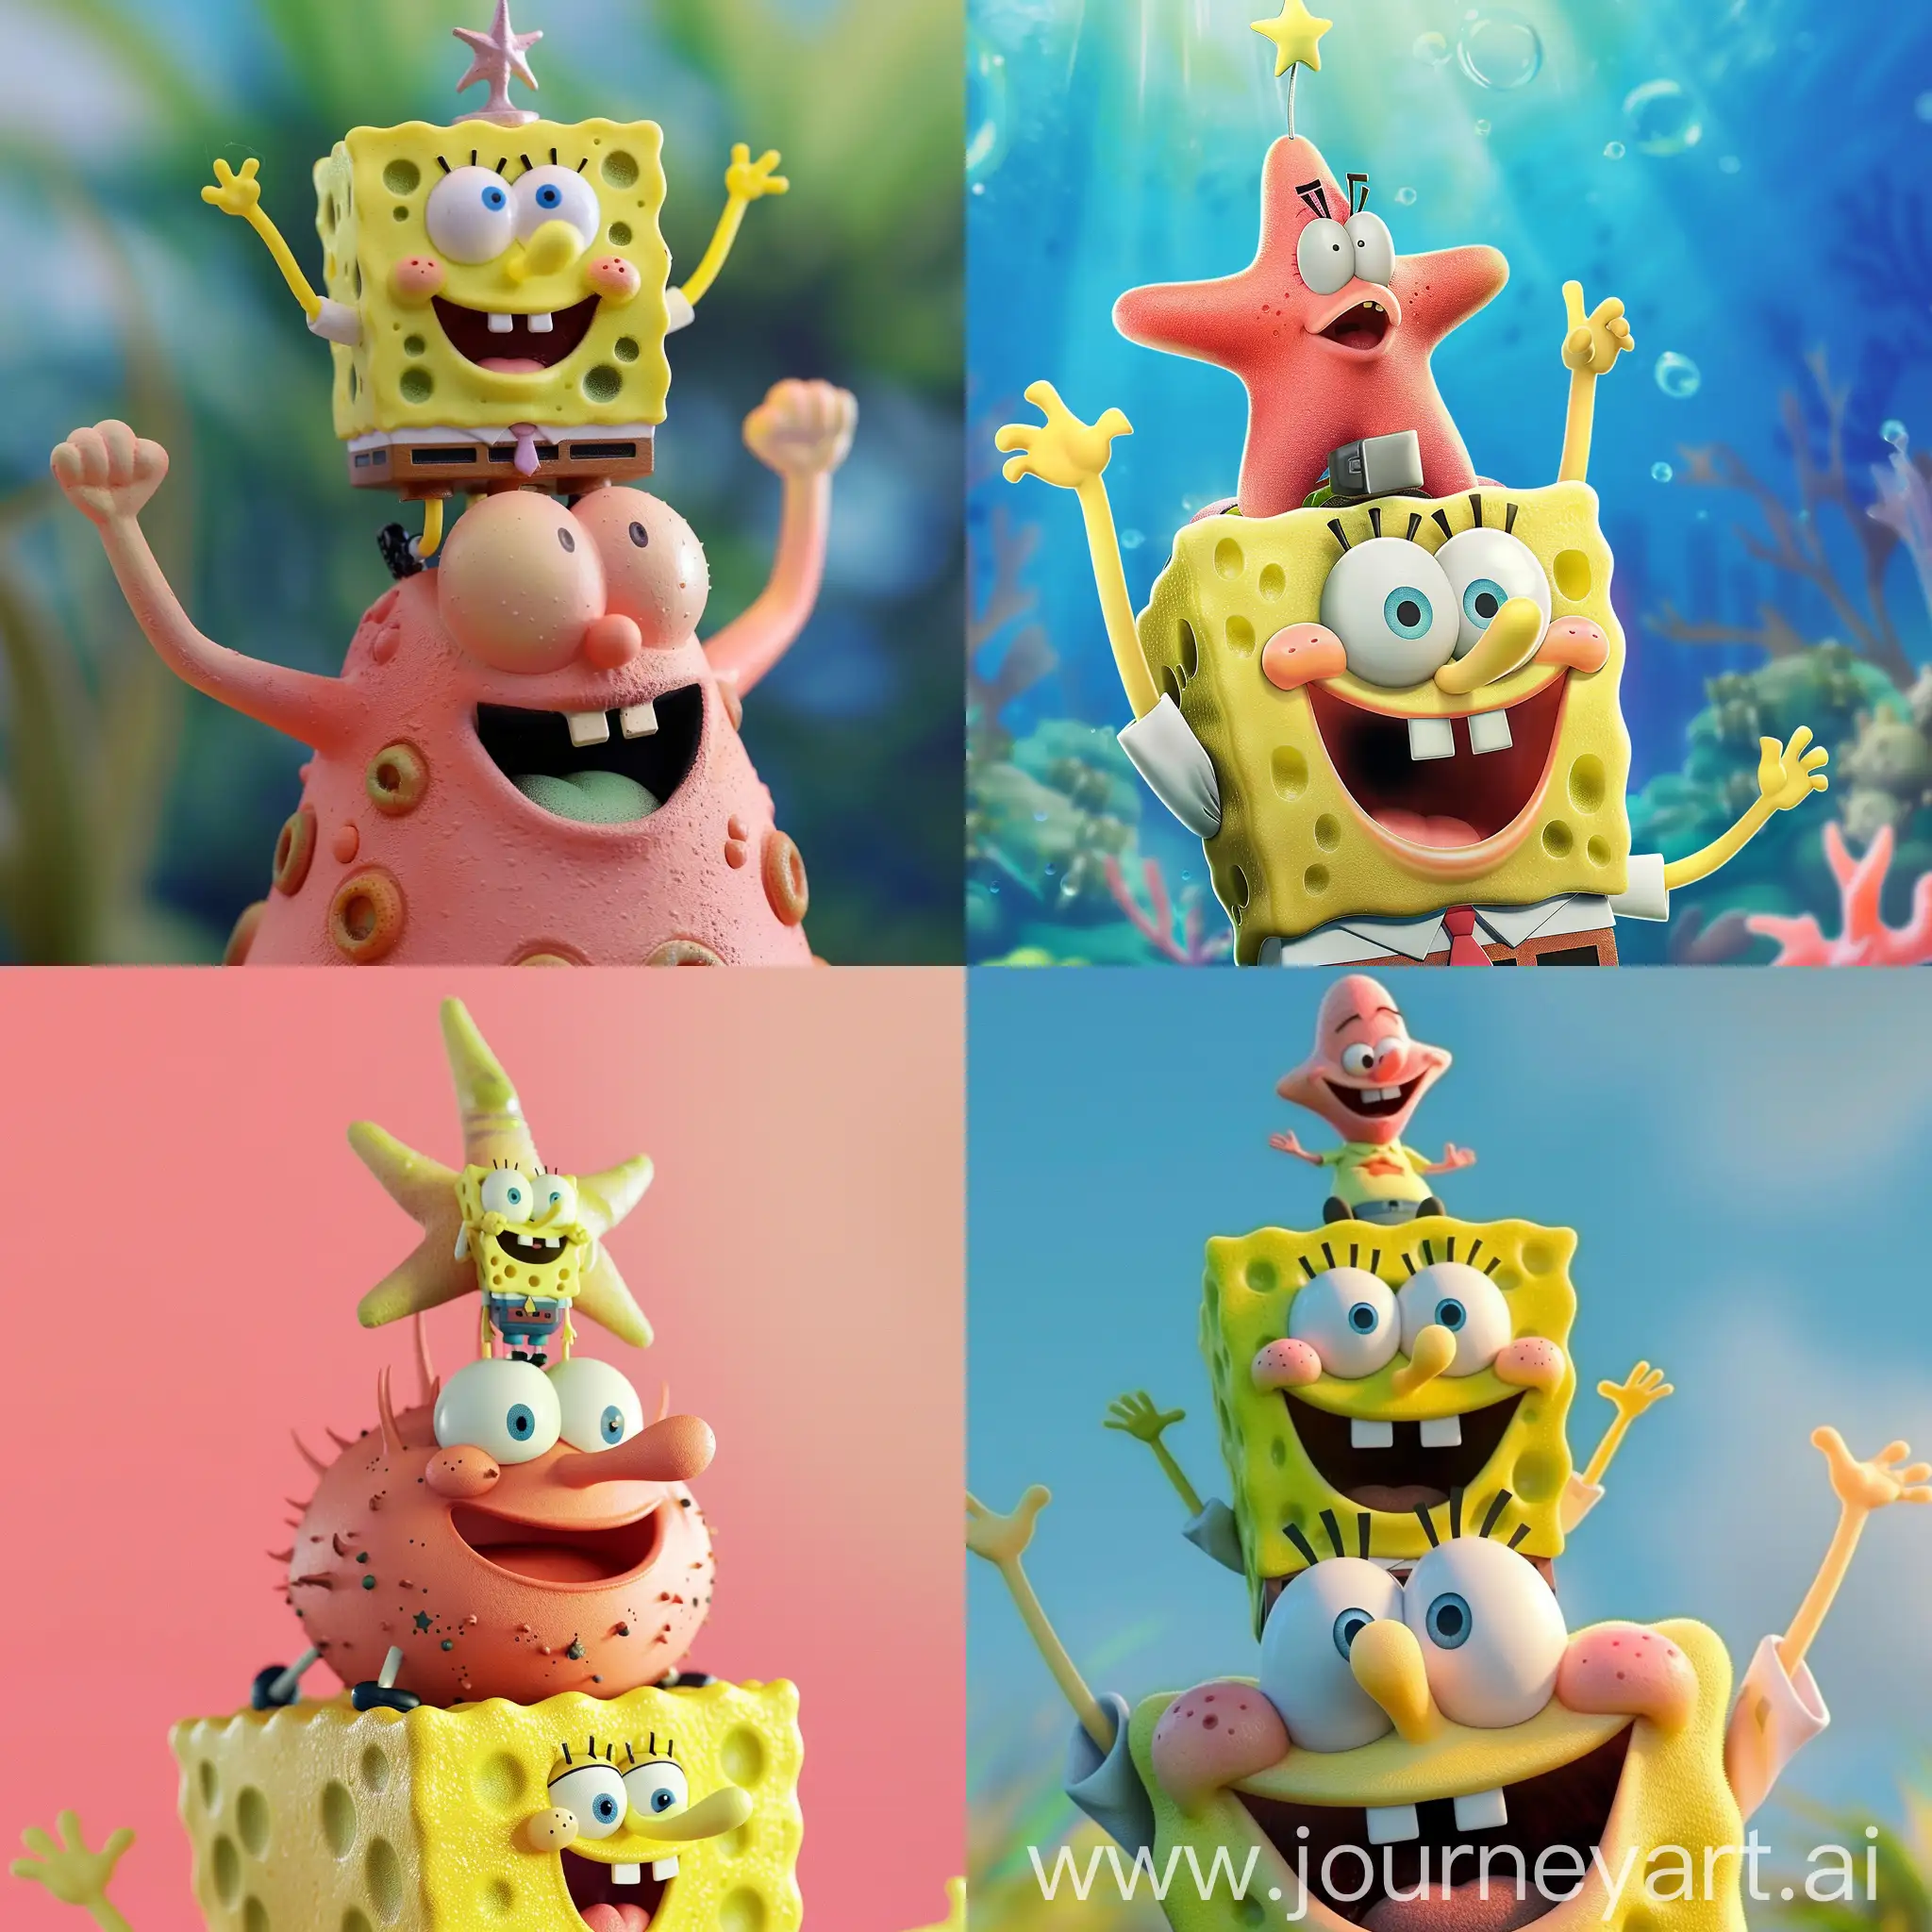 Underwater-Adventure-Duo-Patrick-Star-and-SpongeBob